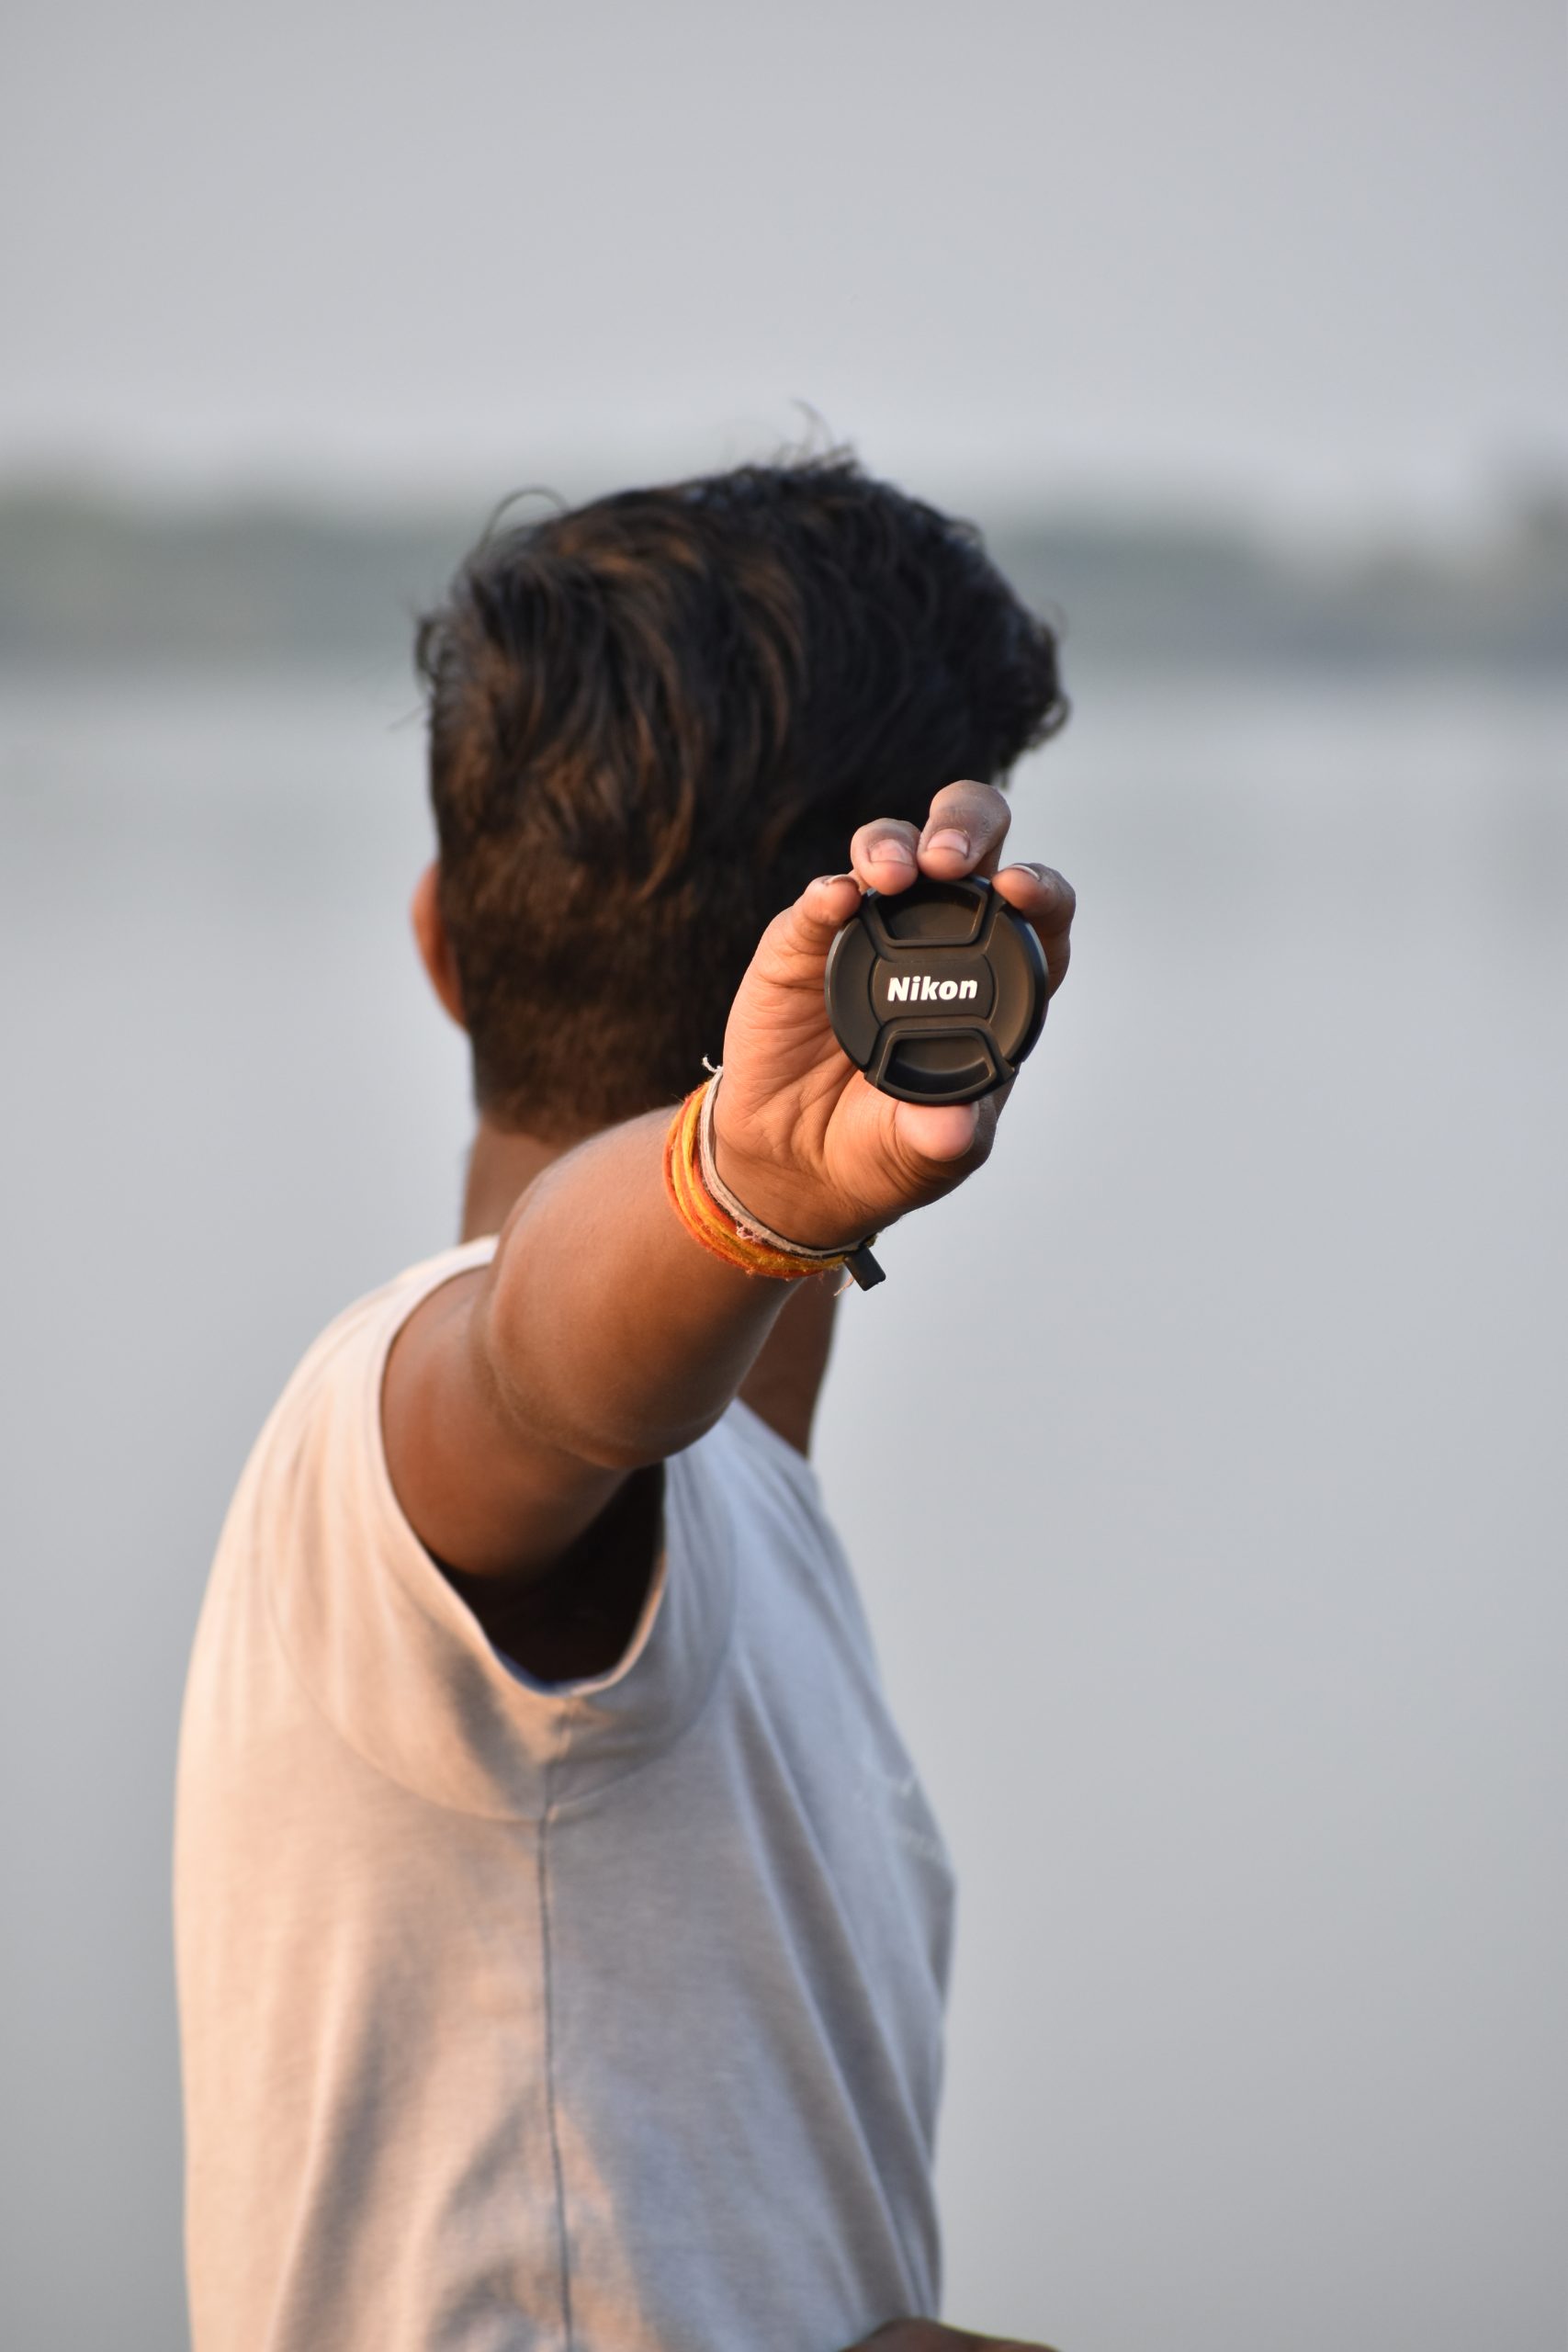 Boy holding camera lens cap